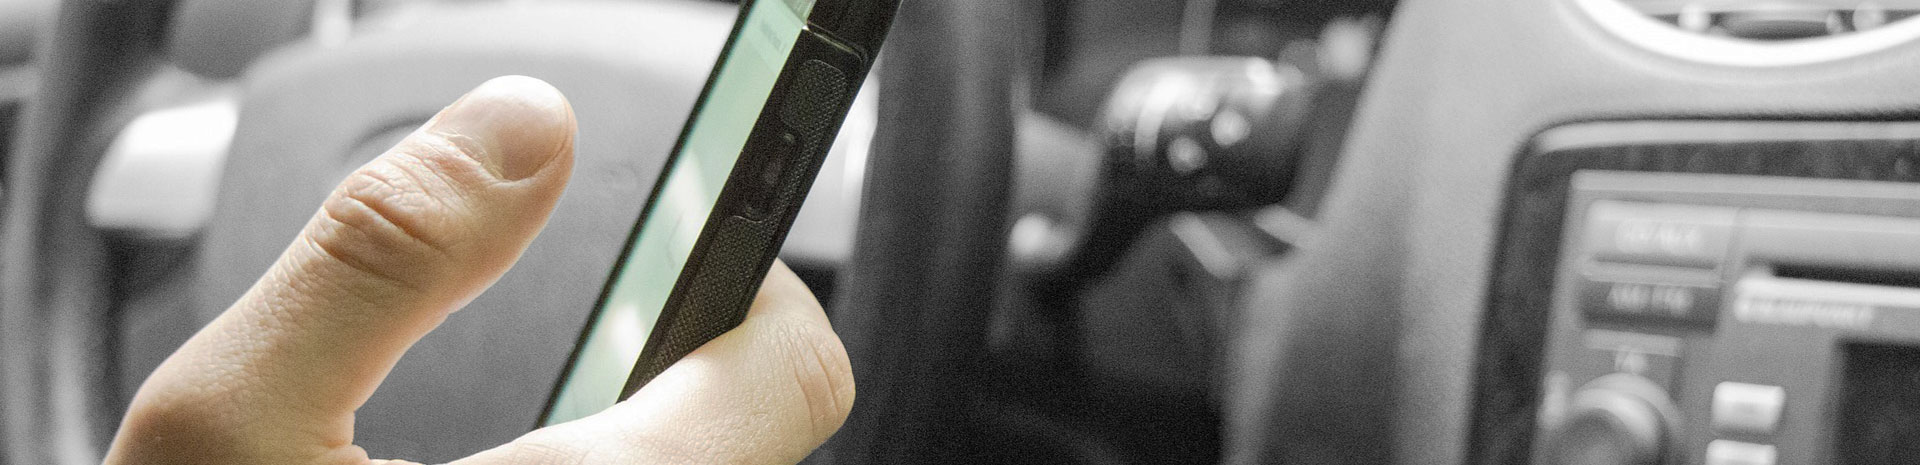 Cameracontrole tegen smartphonegebruik in de auto | LetselPro